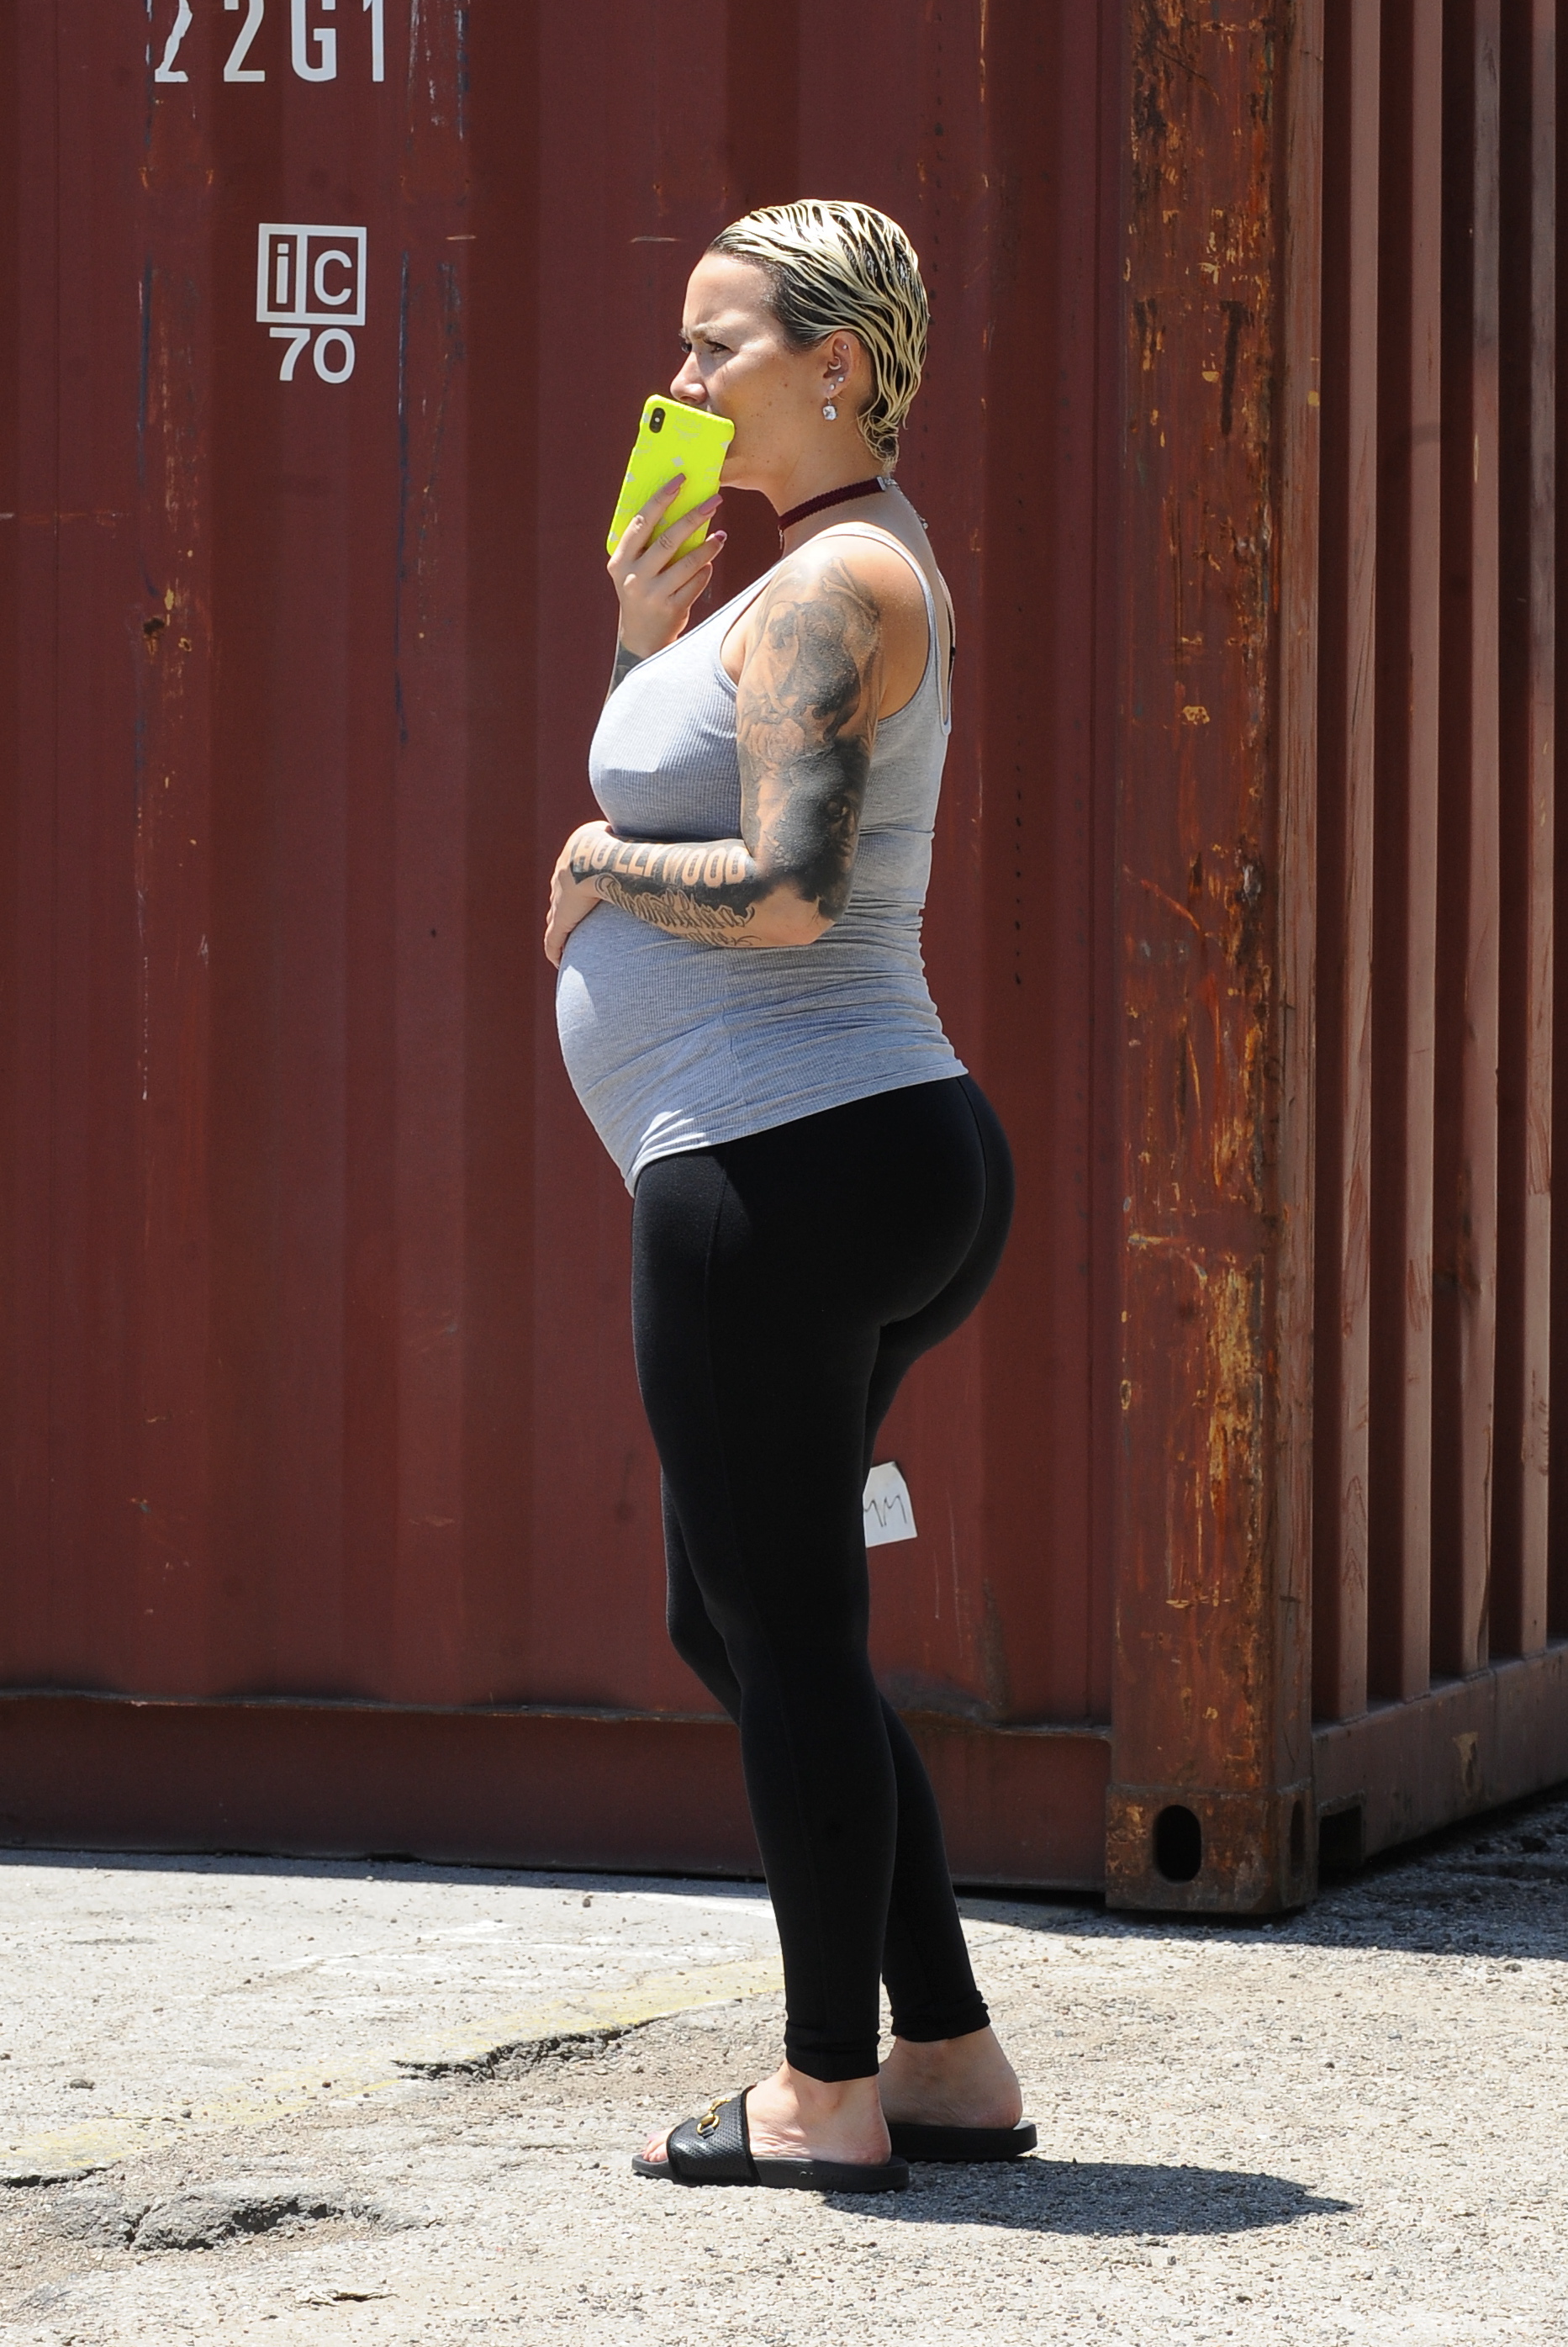 Amber Rose flaunts her famous form in grey leggings